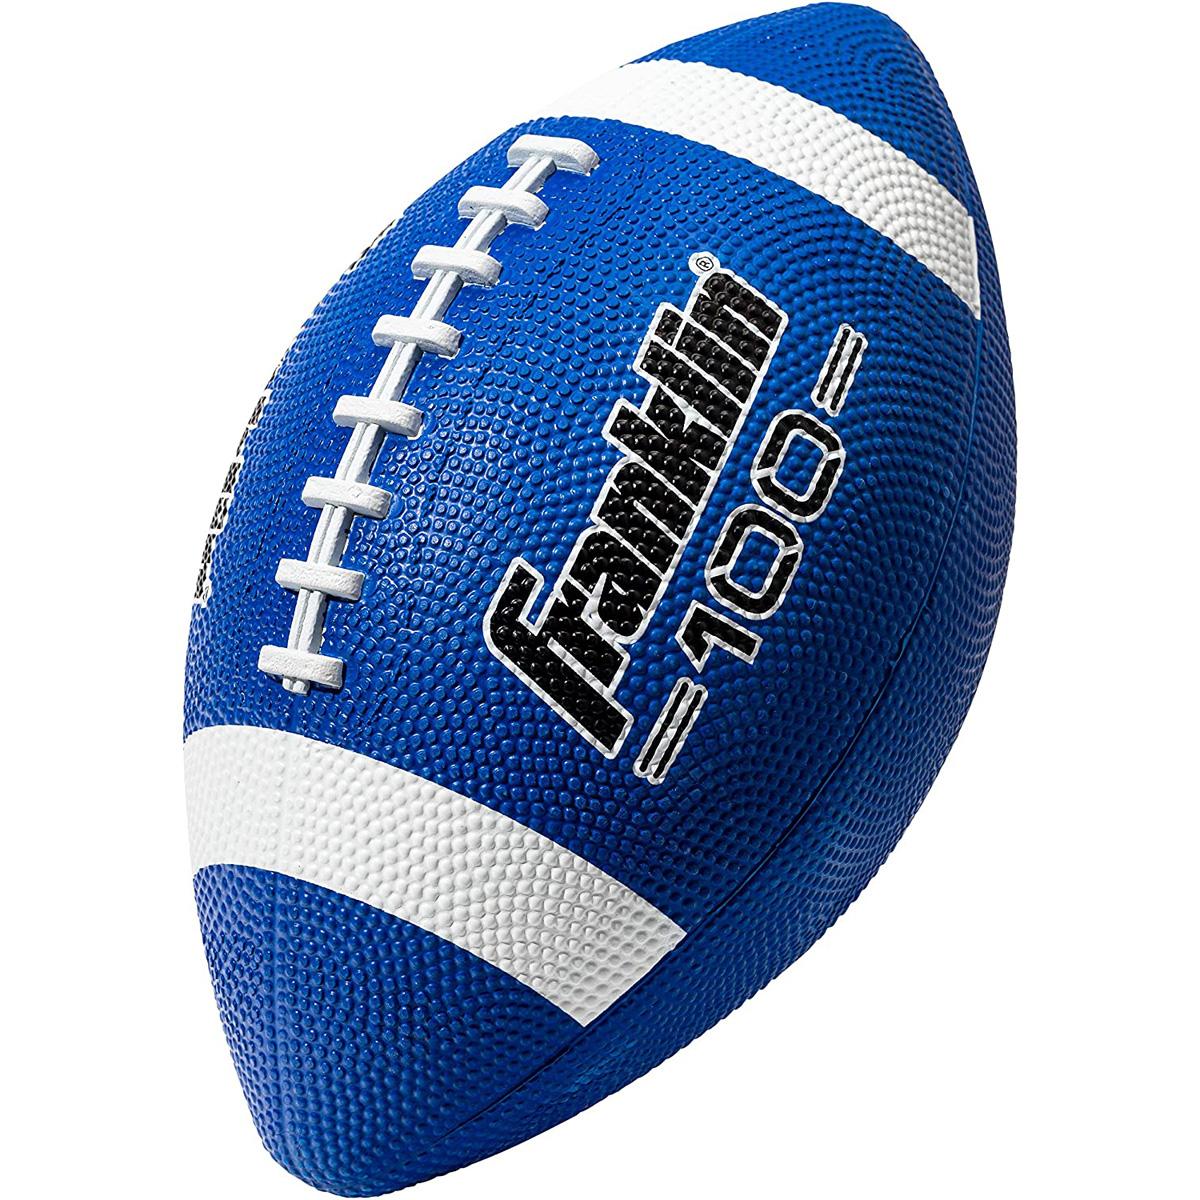 Franklin Sports Grip-Rite 100 Rubber Junior Football for $4.88